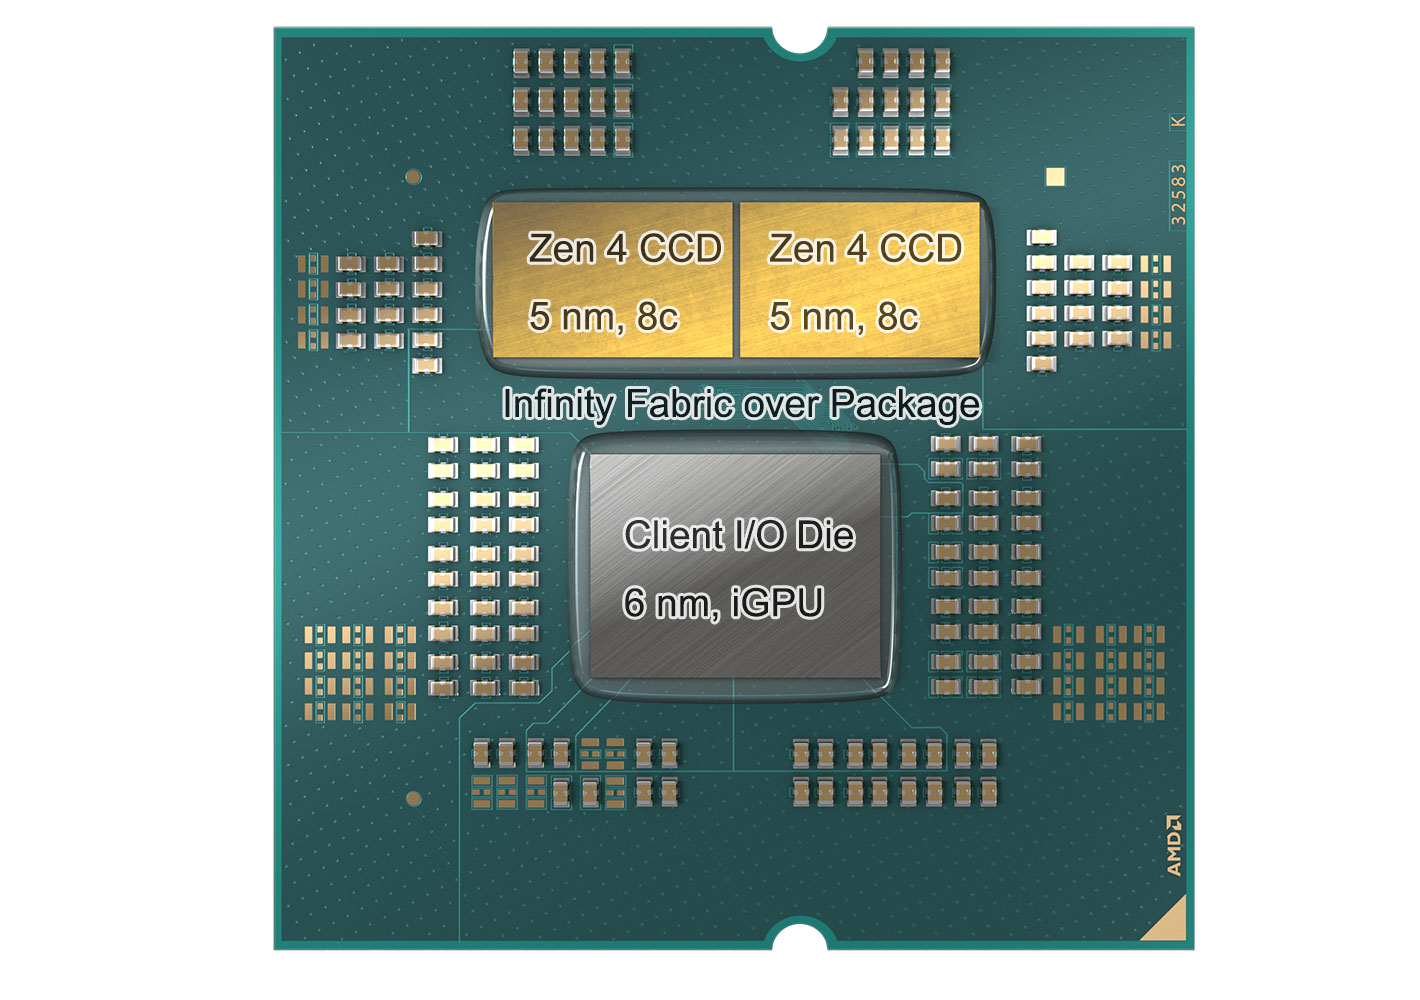 AMD Ryzen 7 7700 processor review (Page 9)